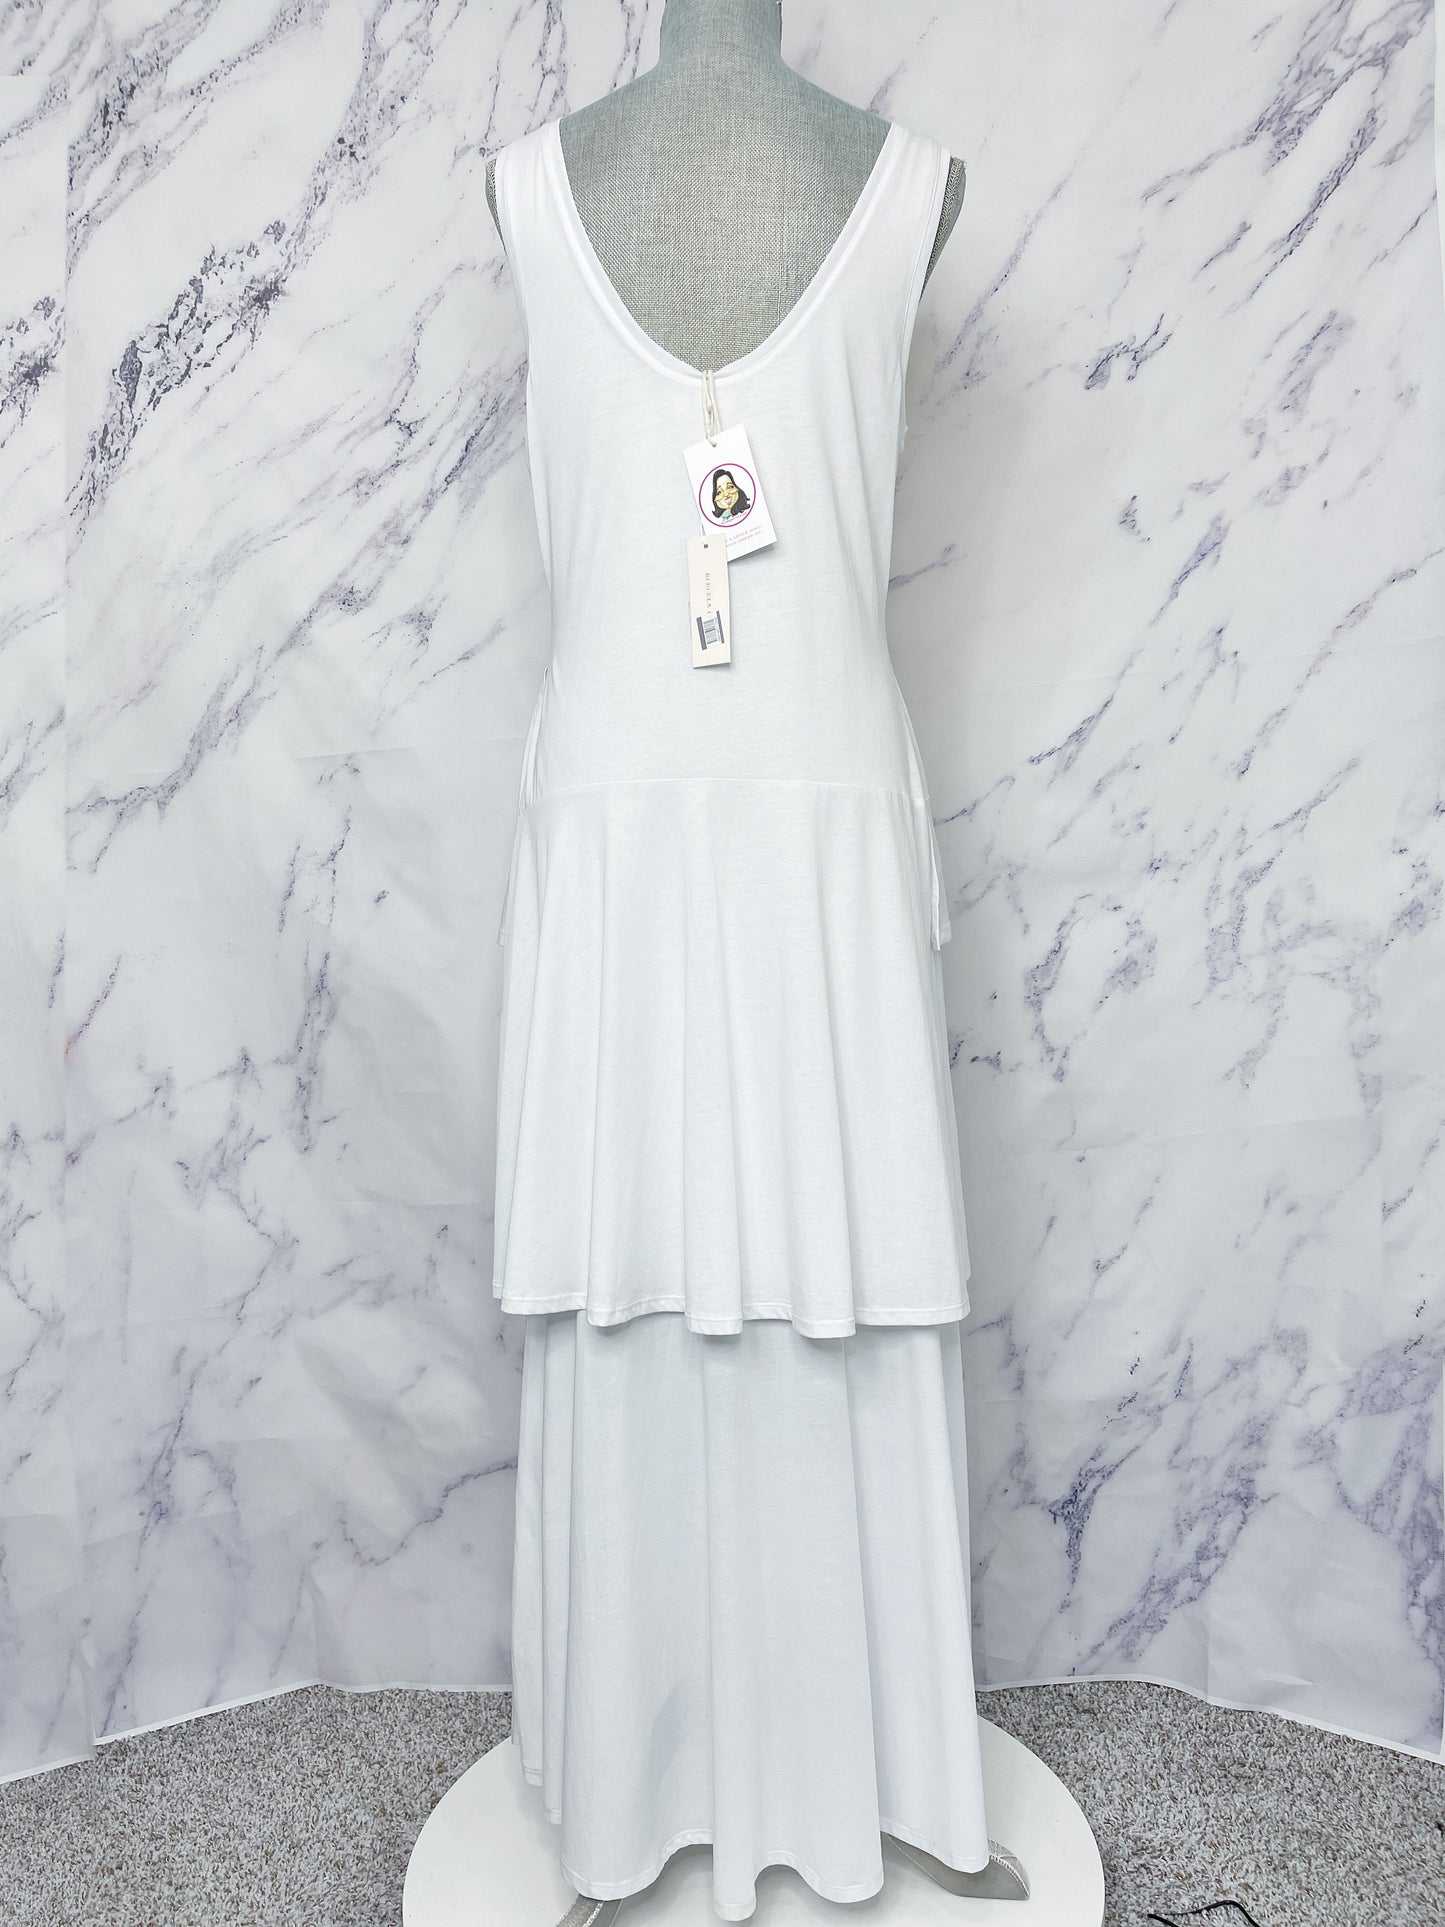 Rebecca Taylor | Tiered White Tank Dress | Size L